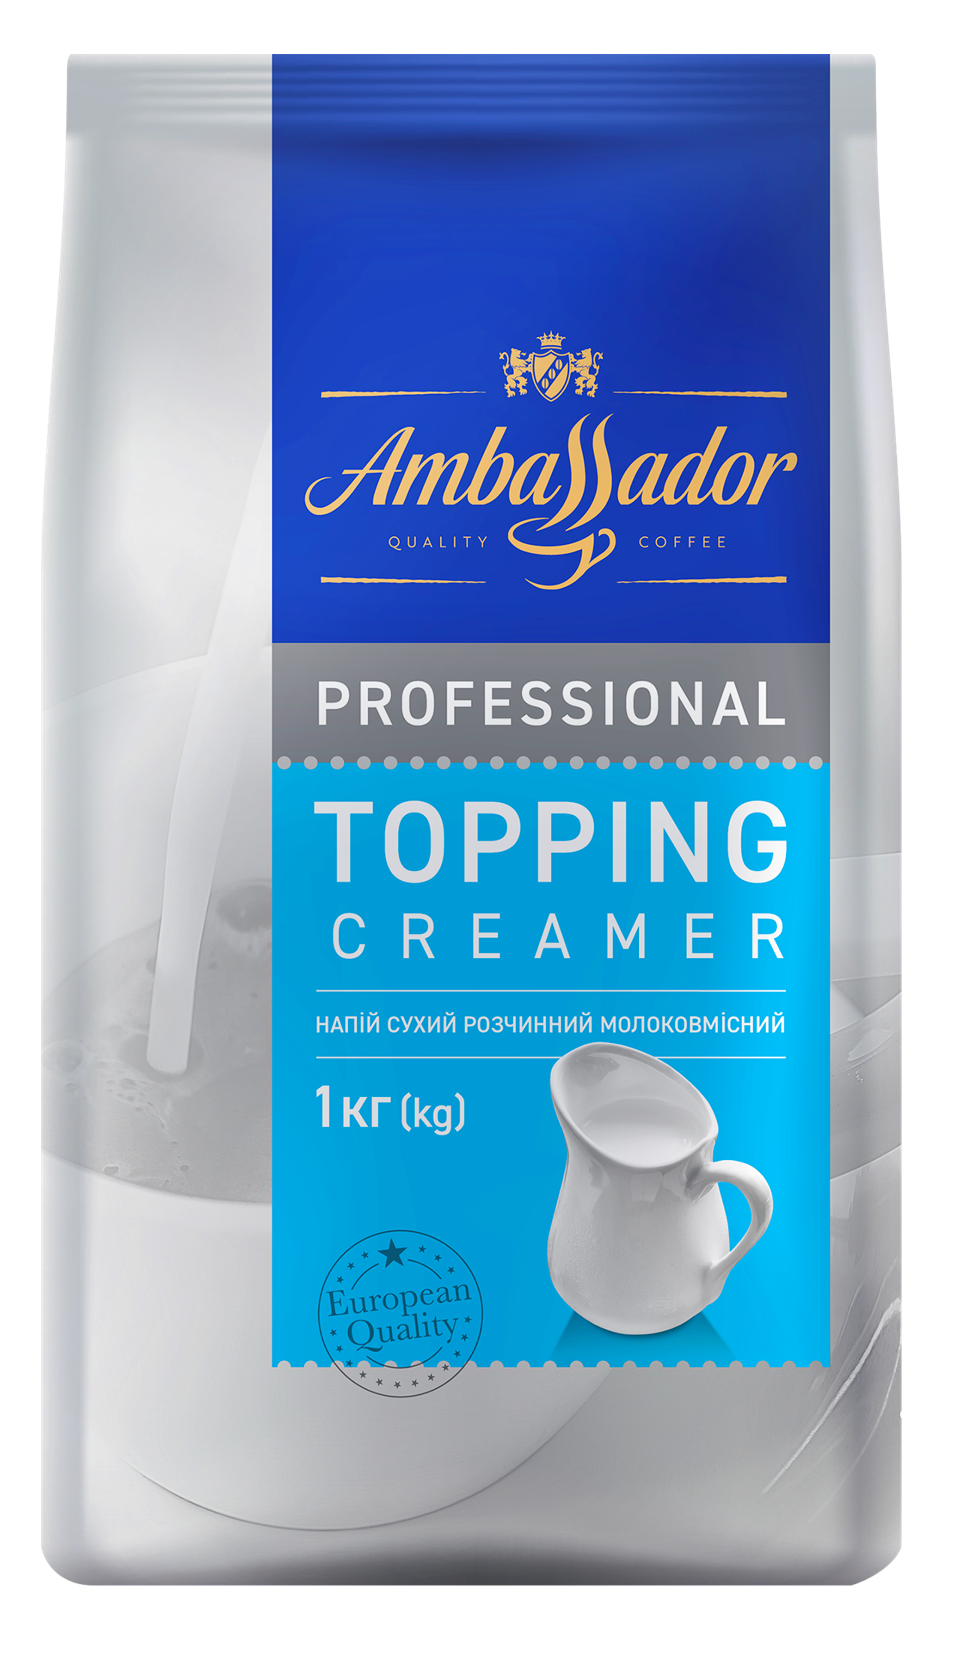 Топпінг для вендингу Ambassador Professional Topping Creamer